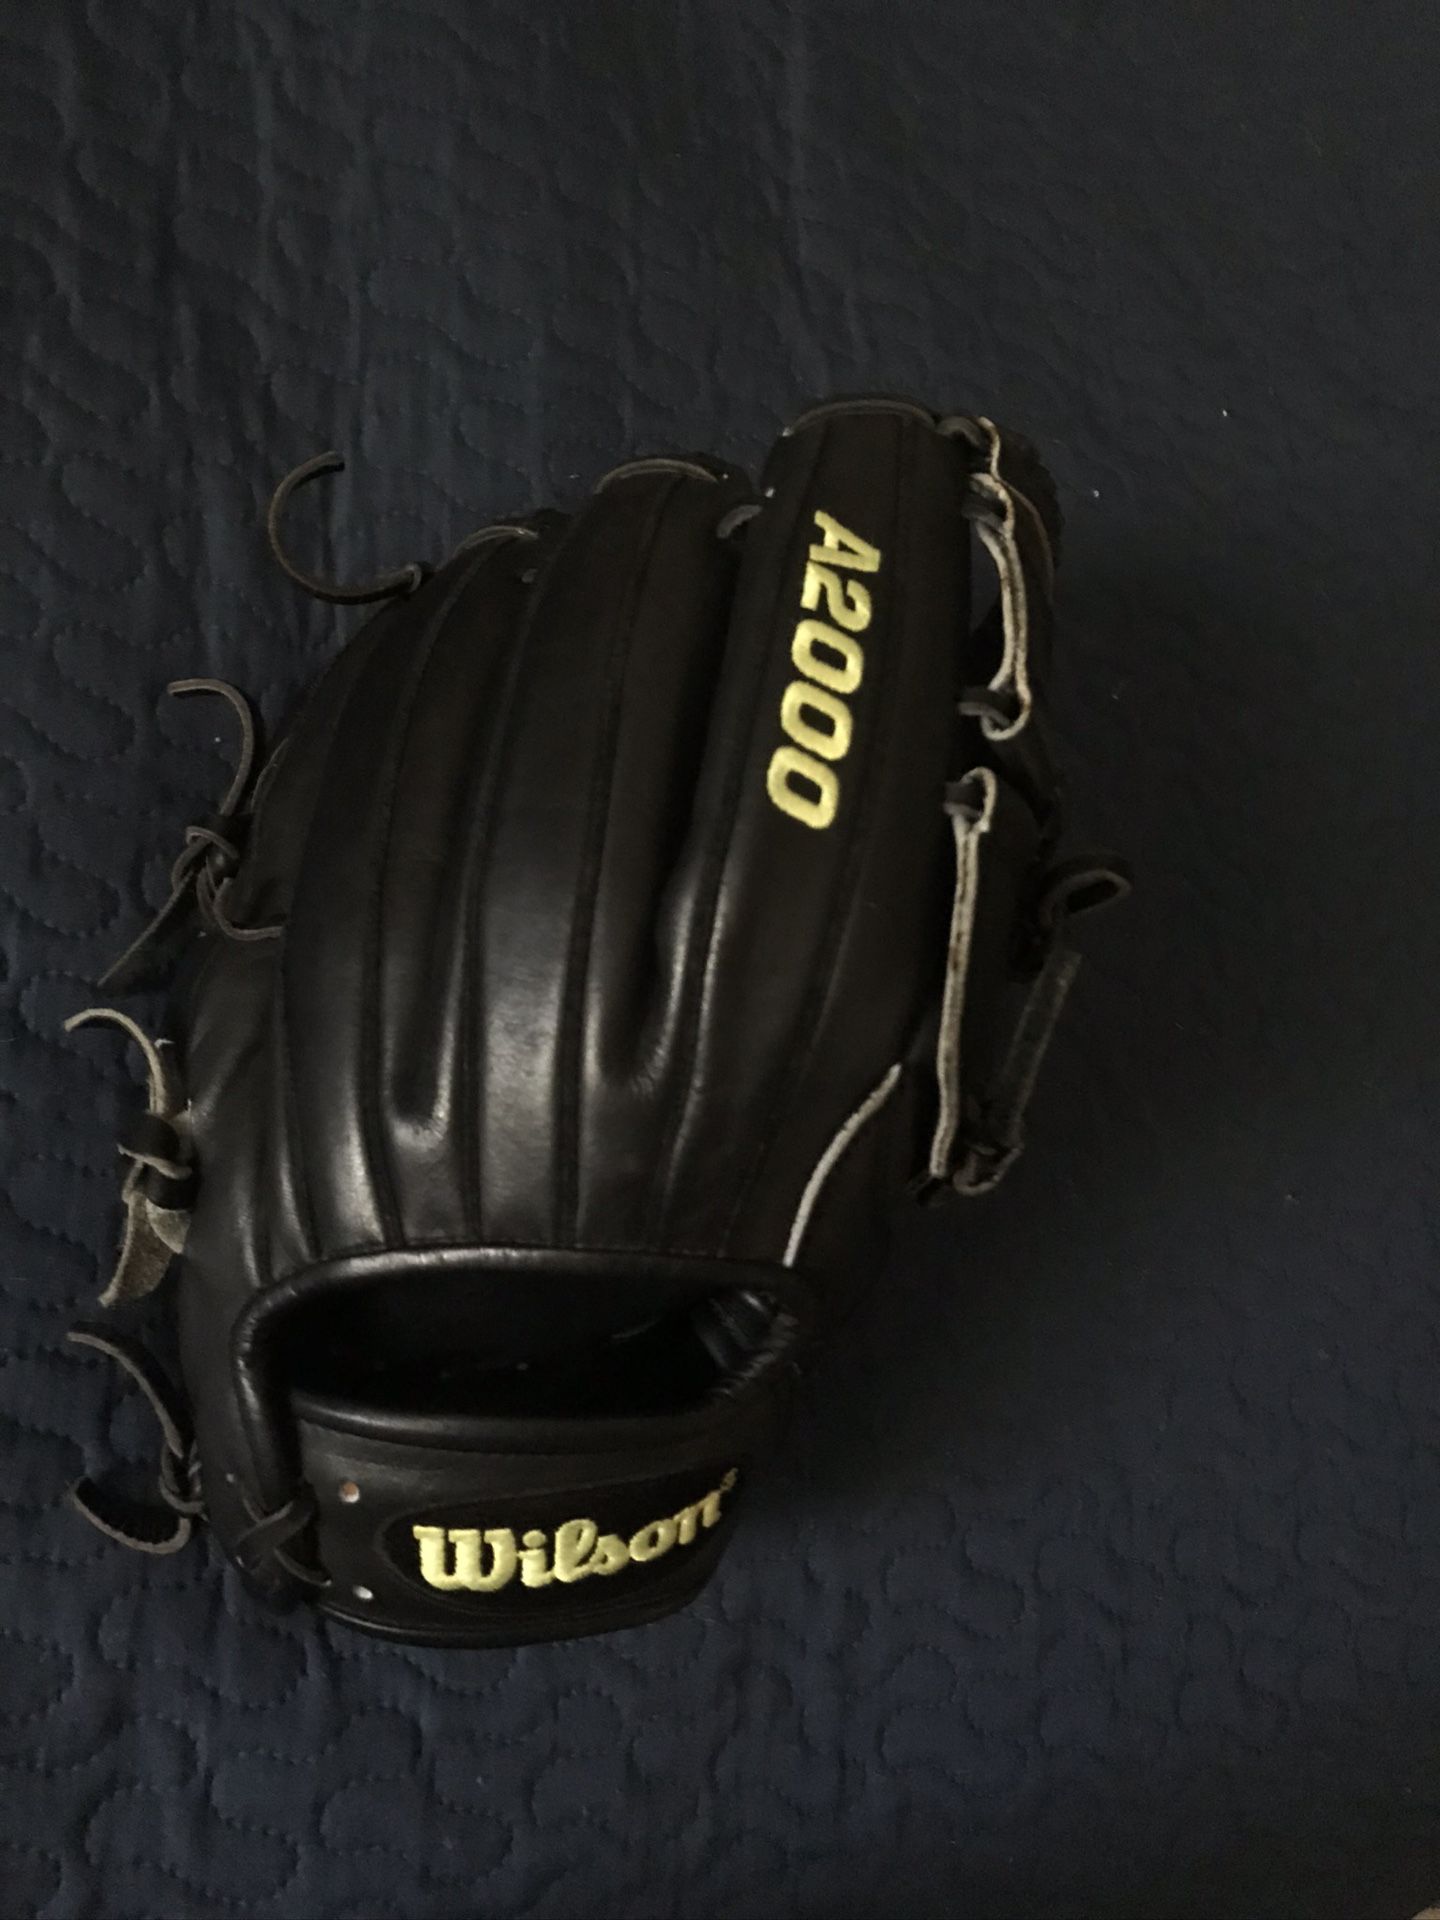 Profesional baseball glove A2000